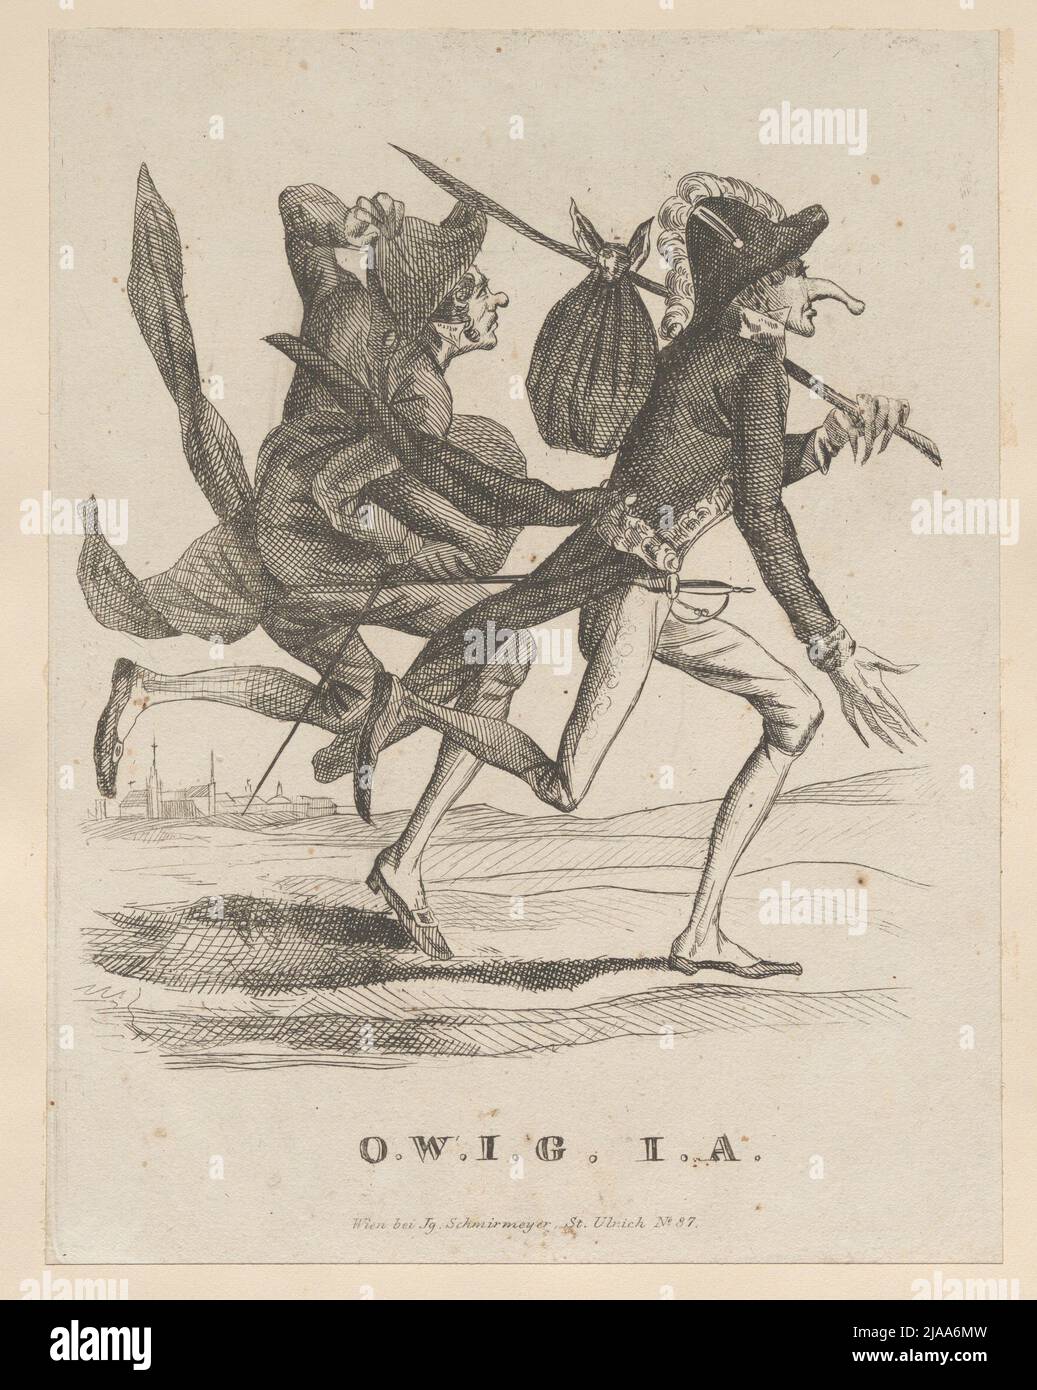 Czapka and Metternich on the run (caricature). Ignaz Schmirmeyer, publisher Stock Photo